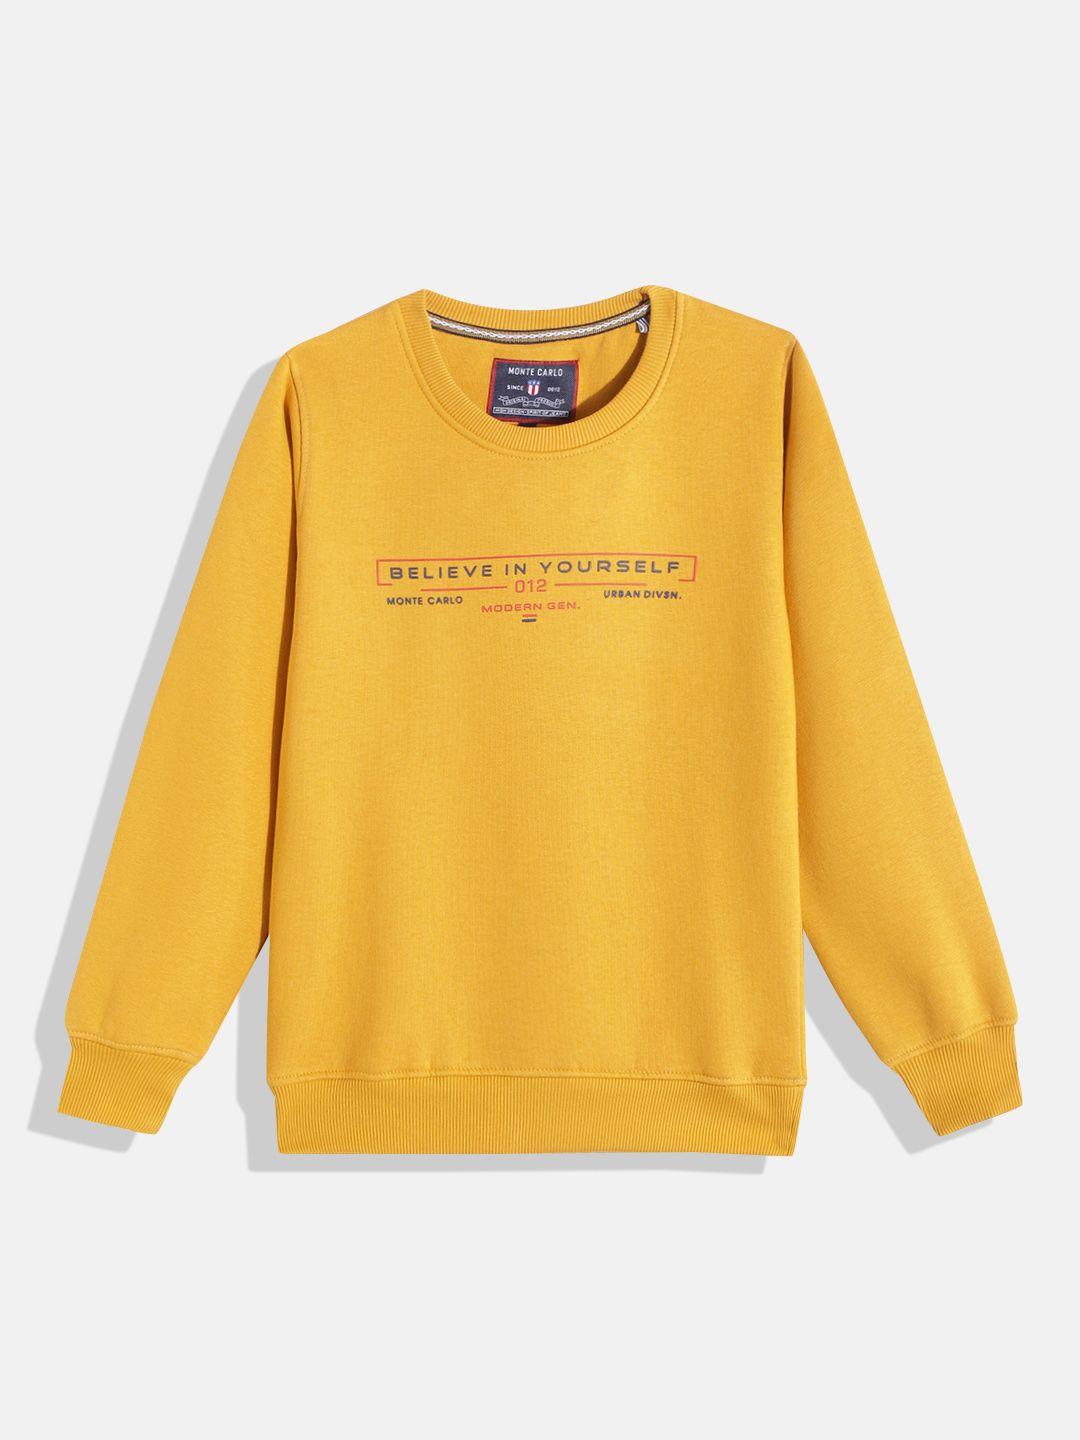 monte carlo boys mustard yellow & navy blue brand logo printed sweatshirt